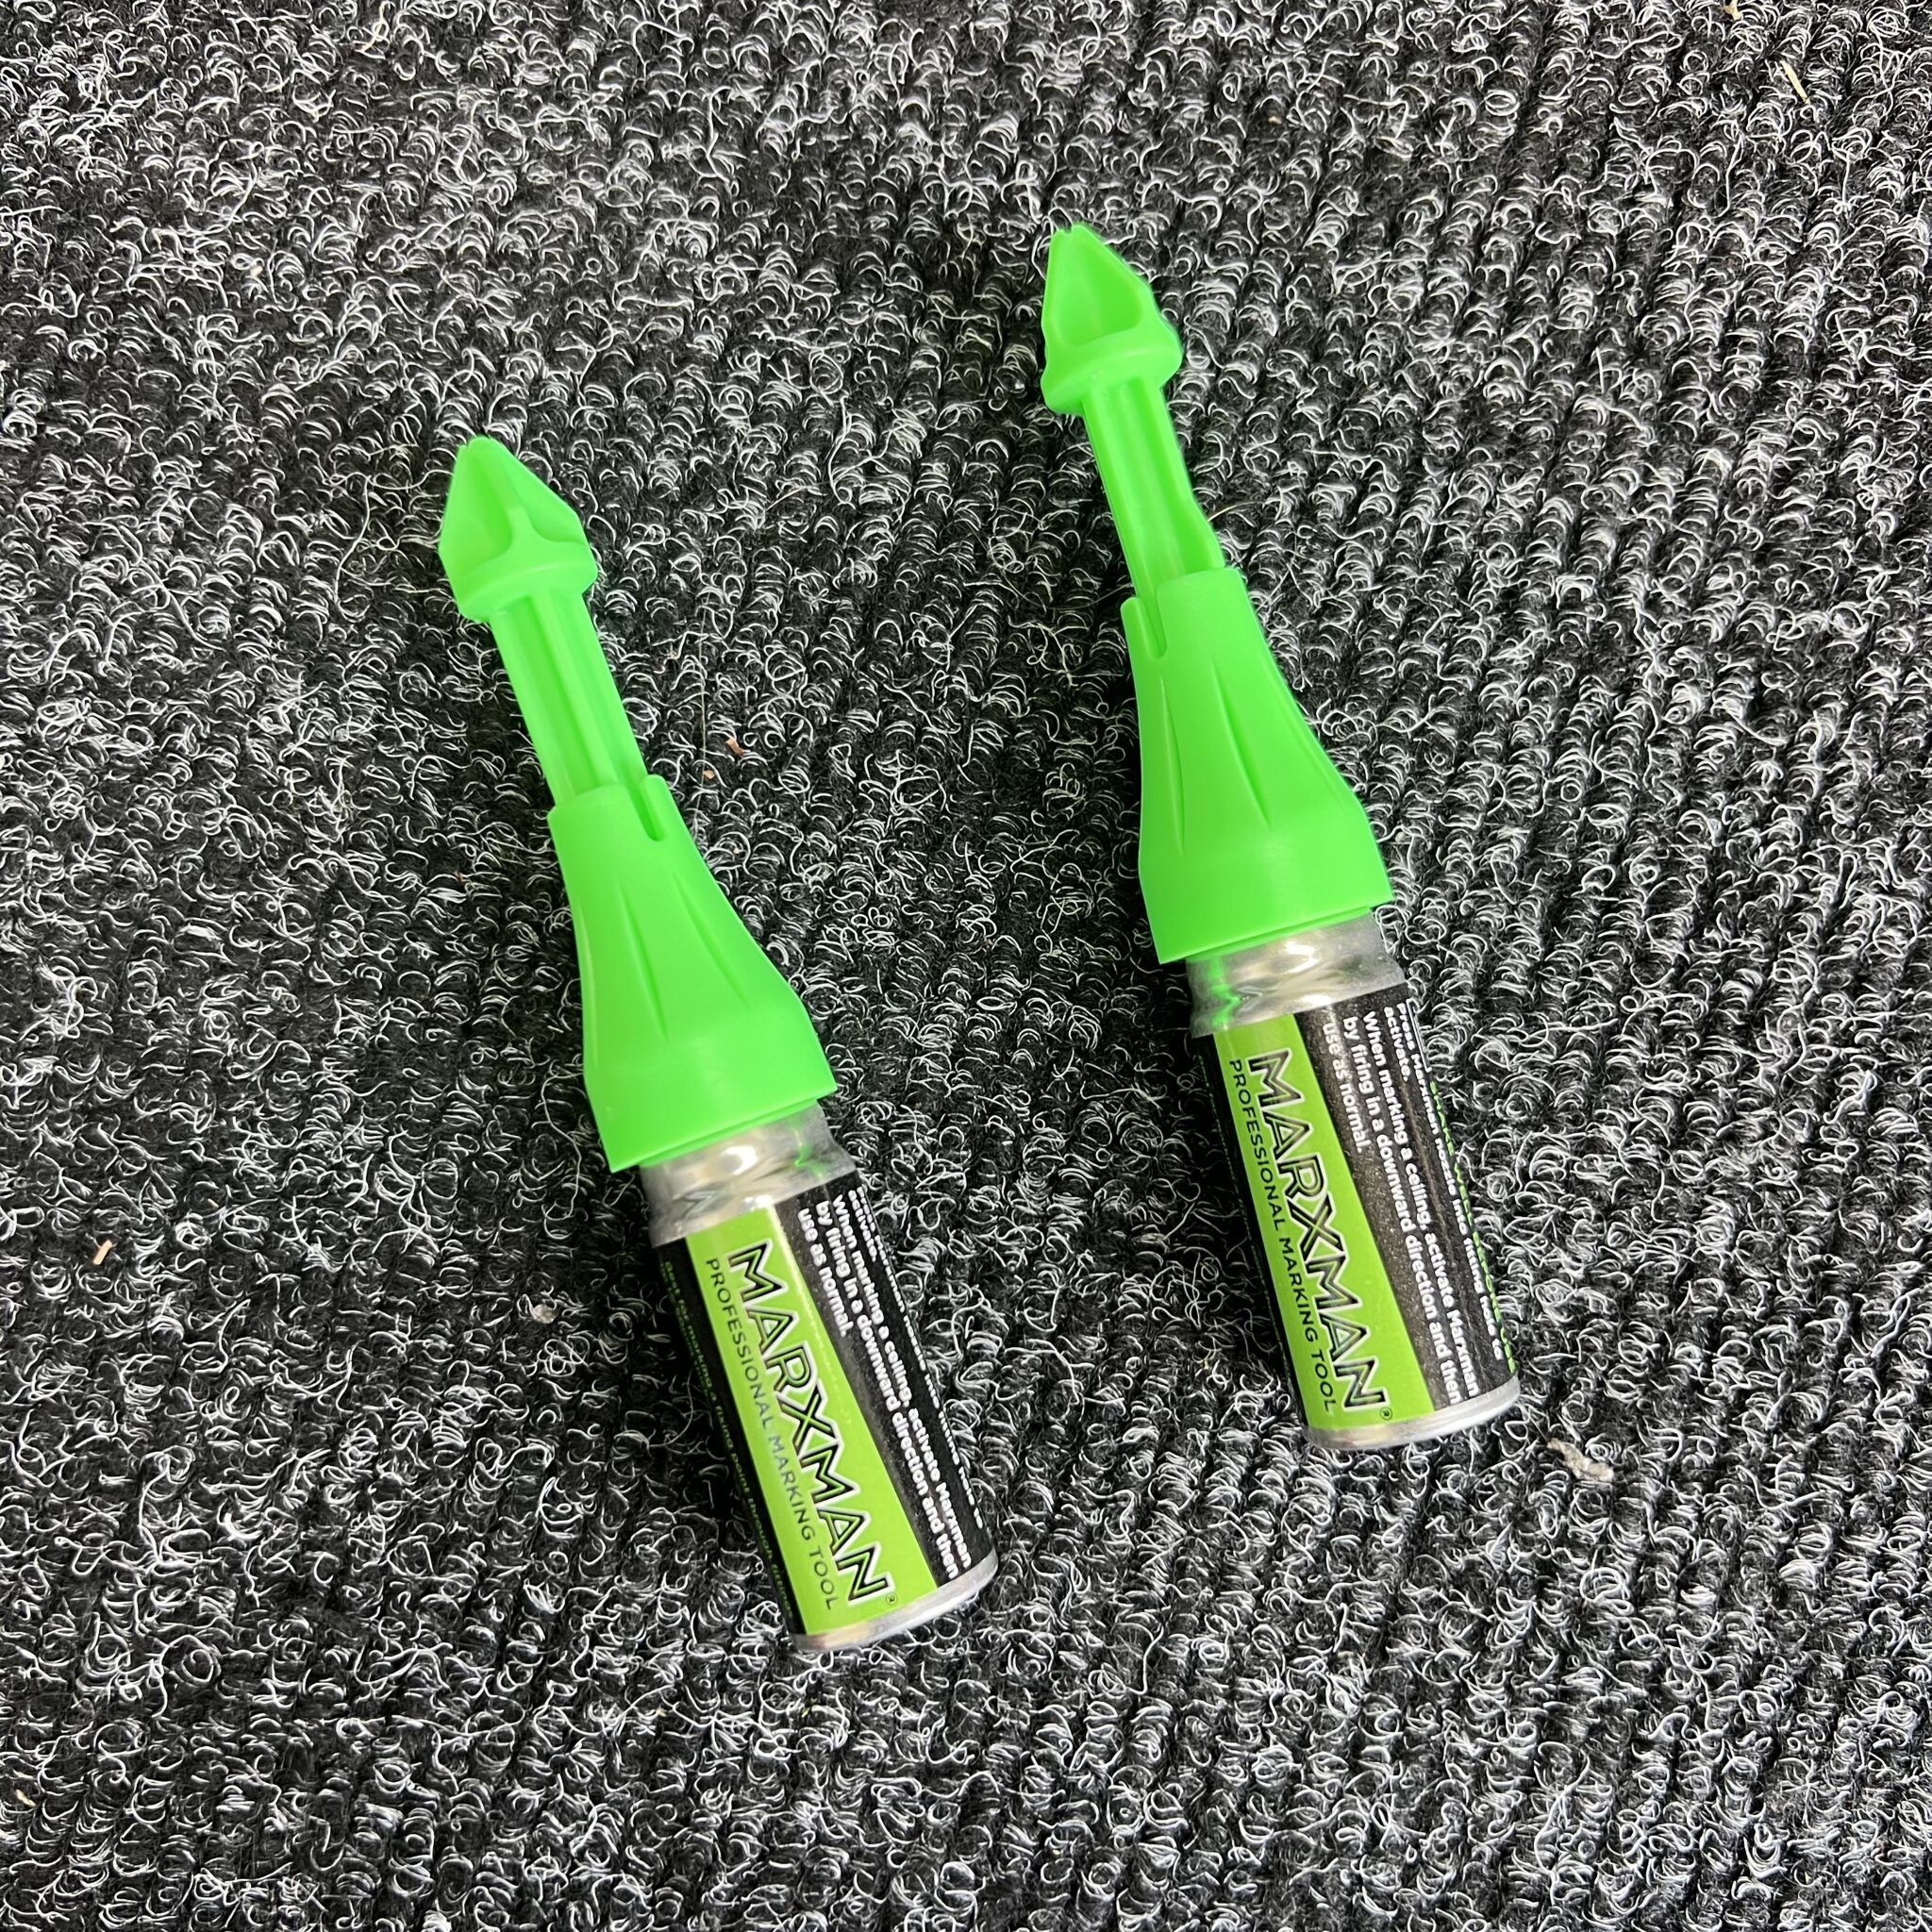 MarXman Green Chalk Marking Pen x4 Hole Marking Tool Upto 45mm